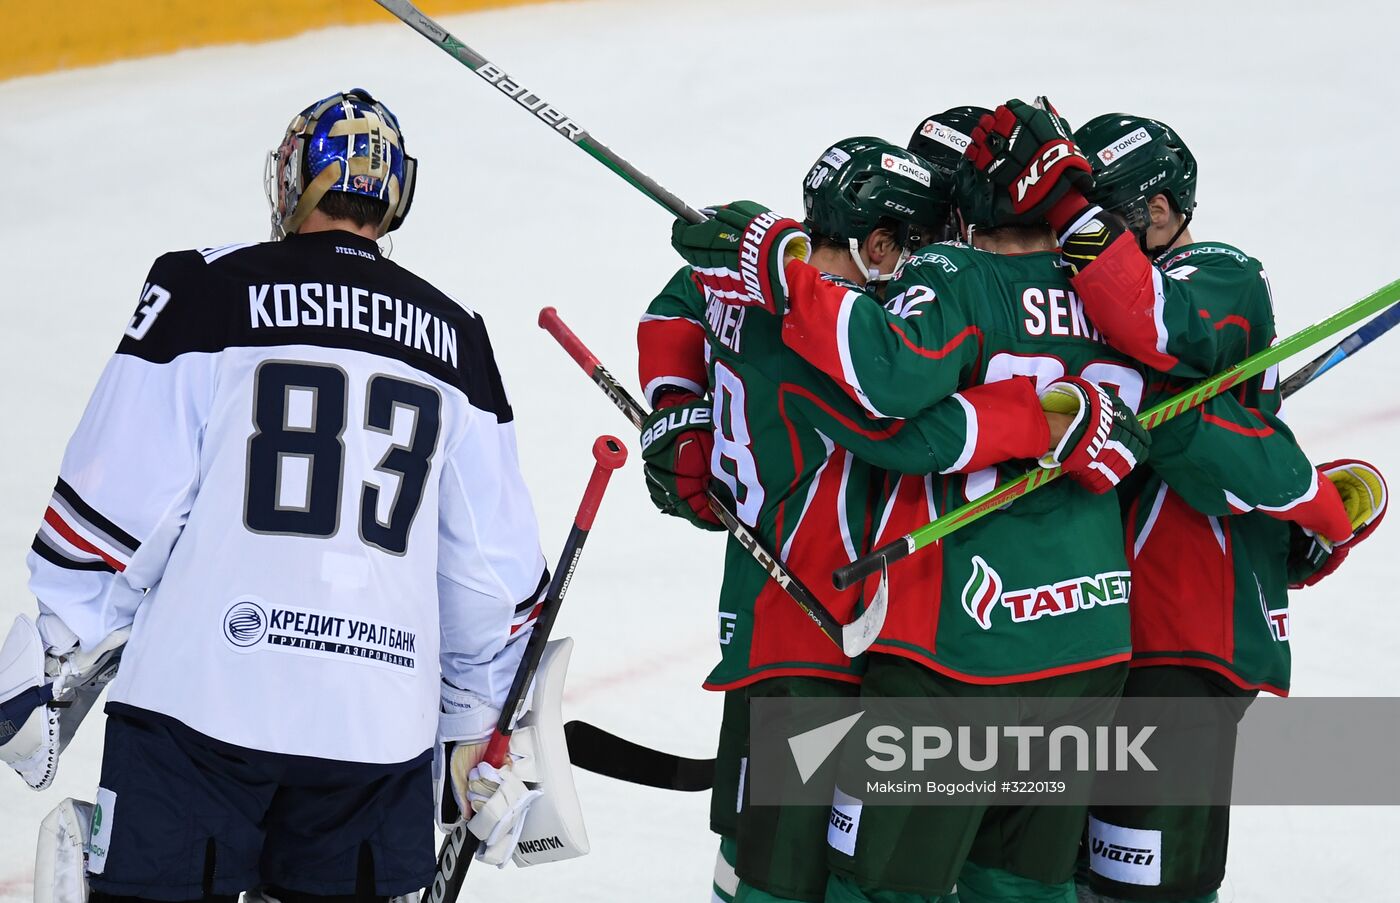 Kontinental Hockey League. Ak Bars vs. Metallurg Magnitogorsk